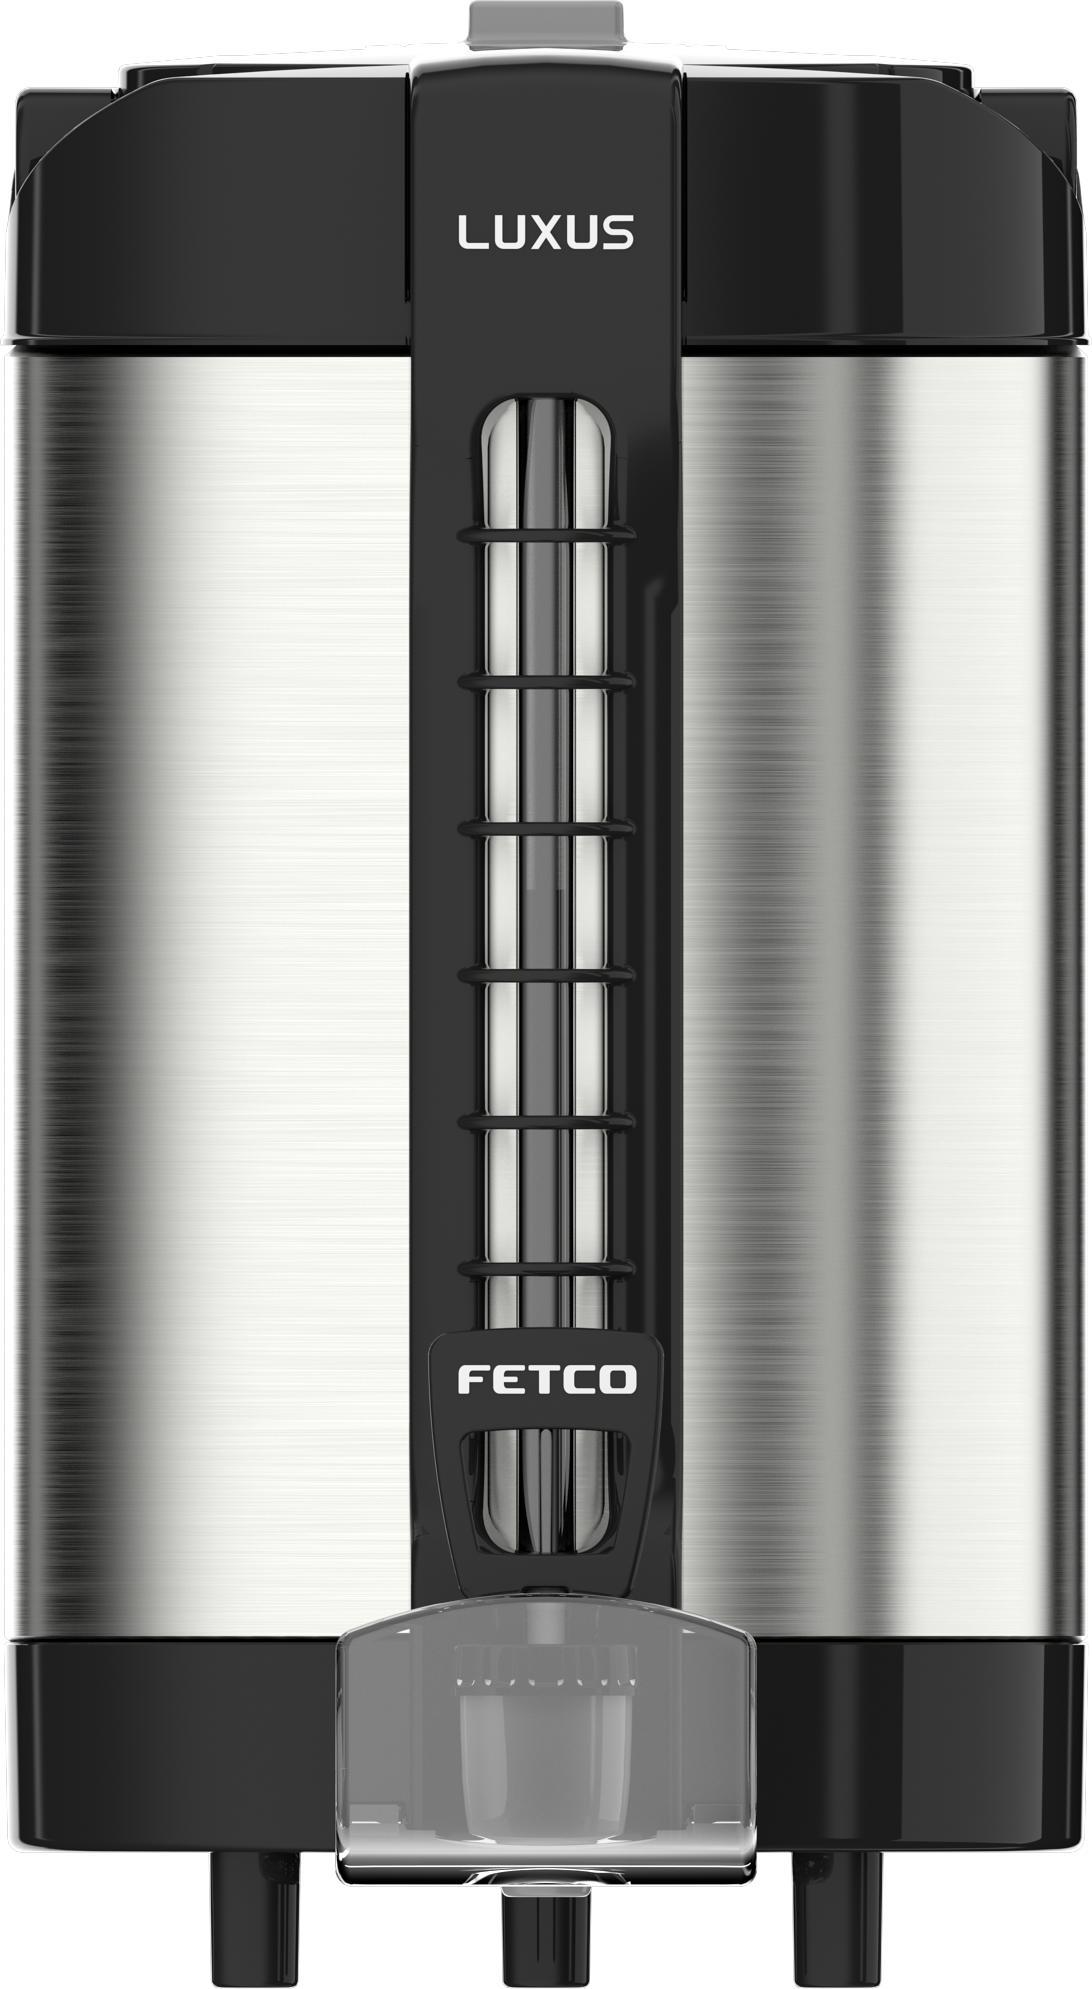 Fetco - 7.6L LUXUS Sight-Gauge Dispenser/Server - LGS-20